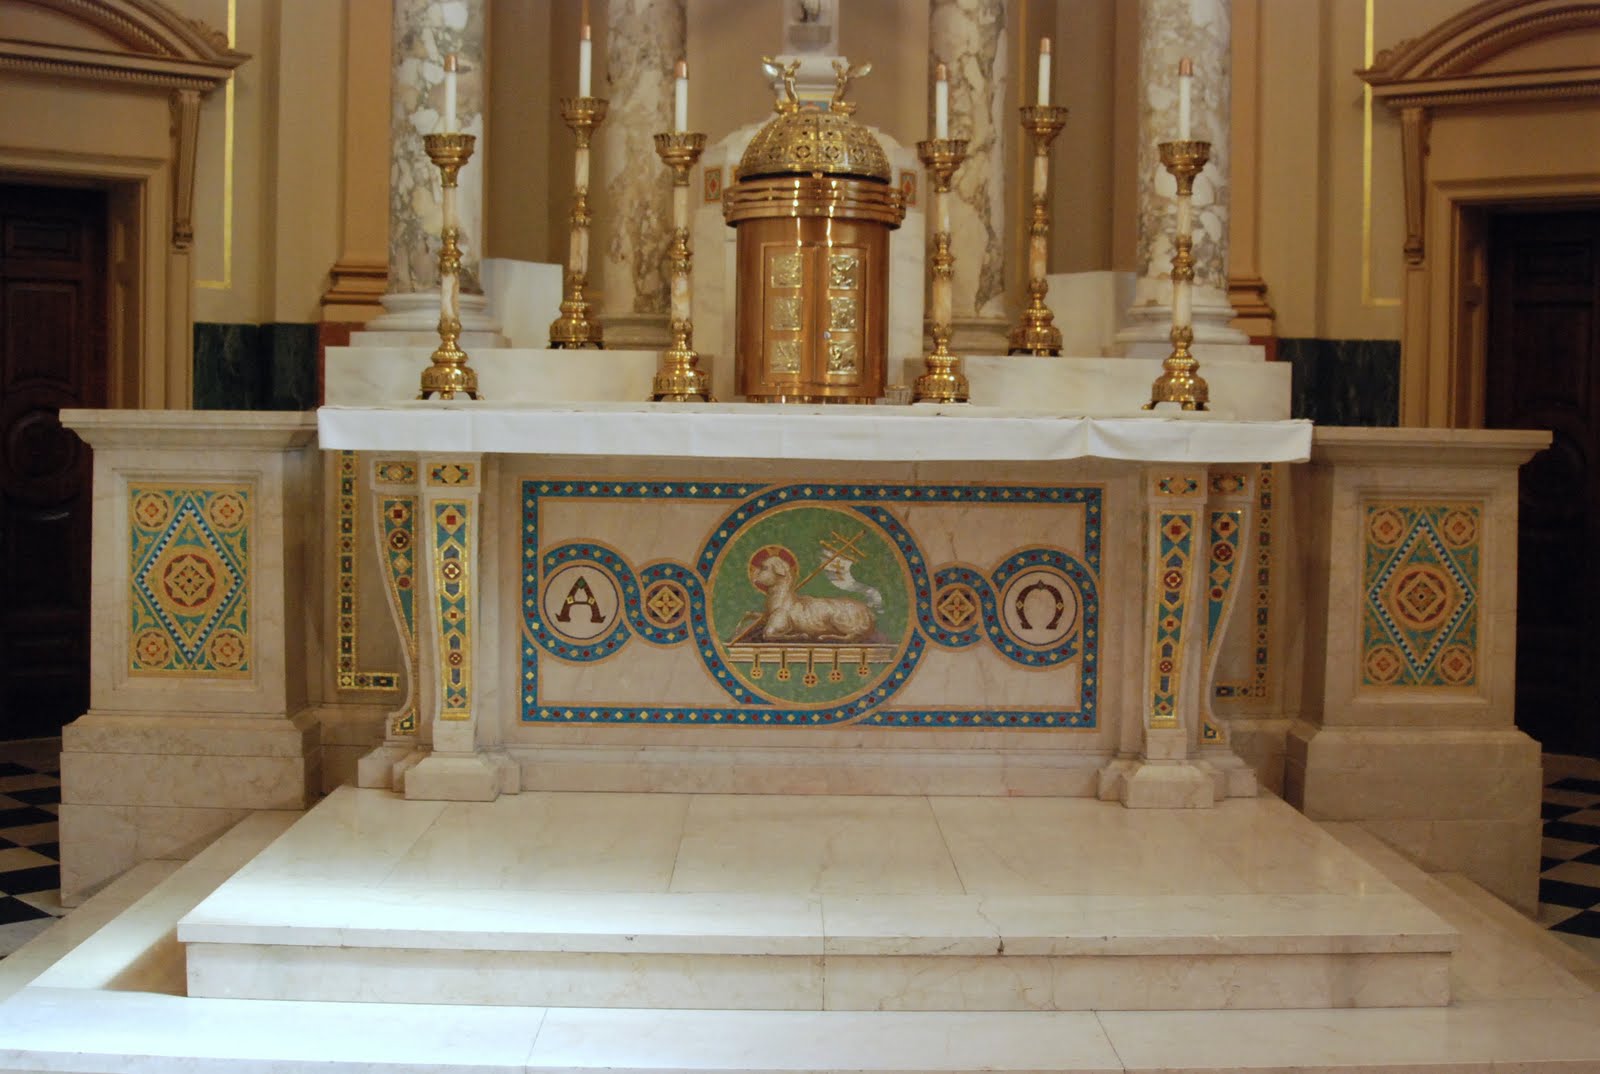 Gallery Photos of "Altar" .